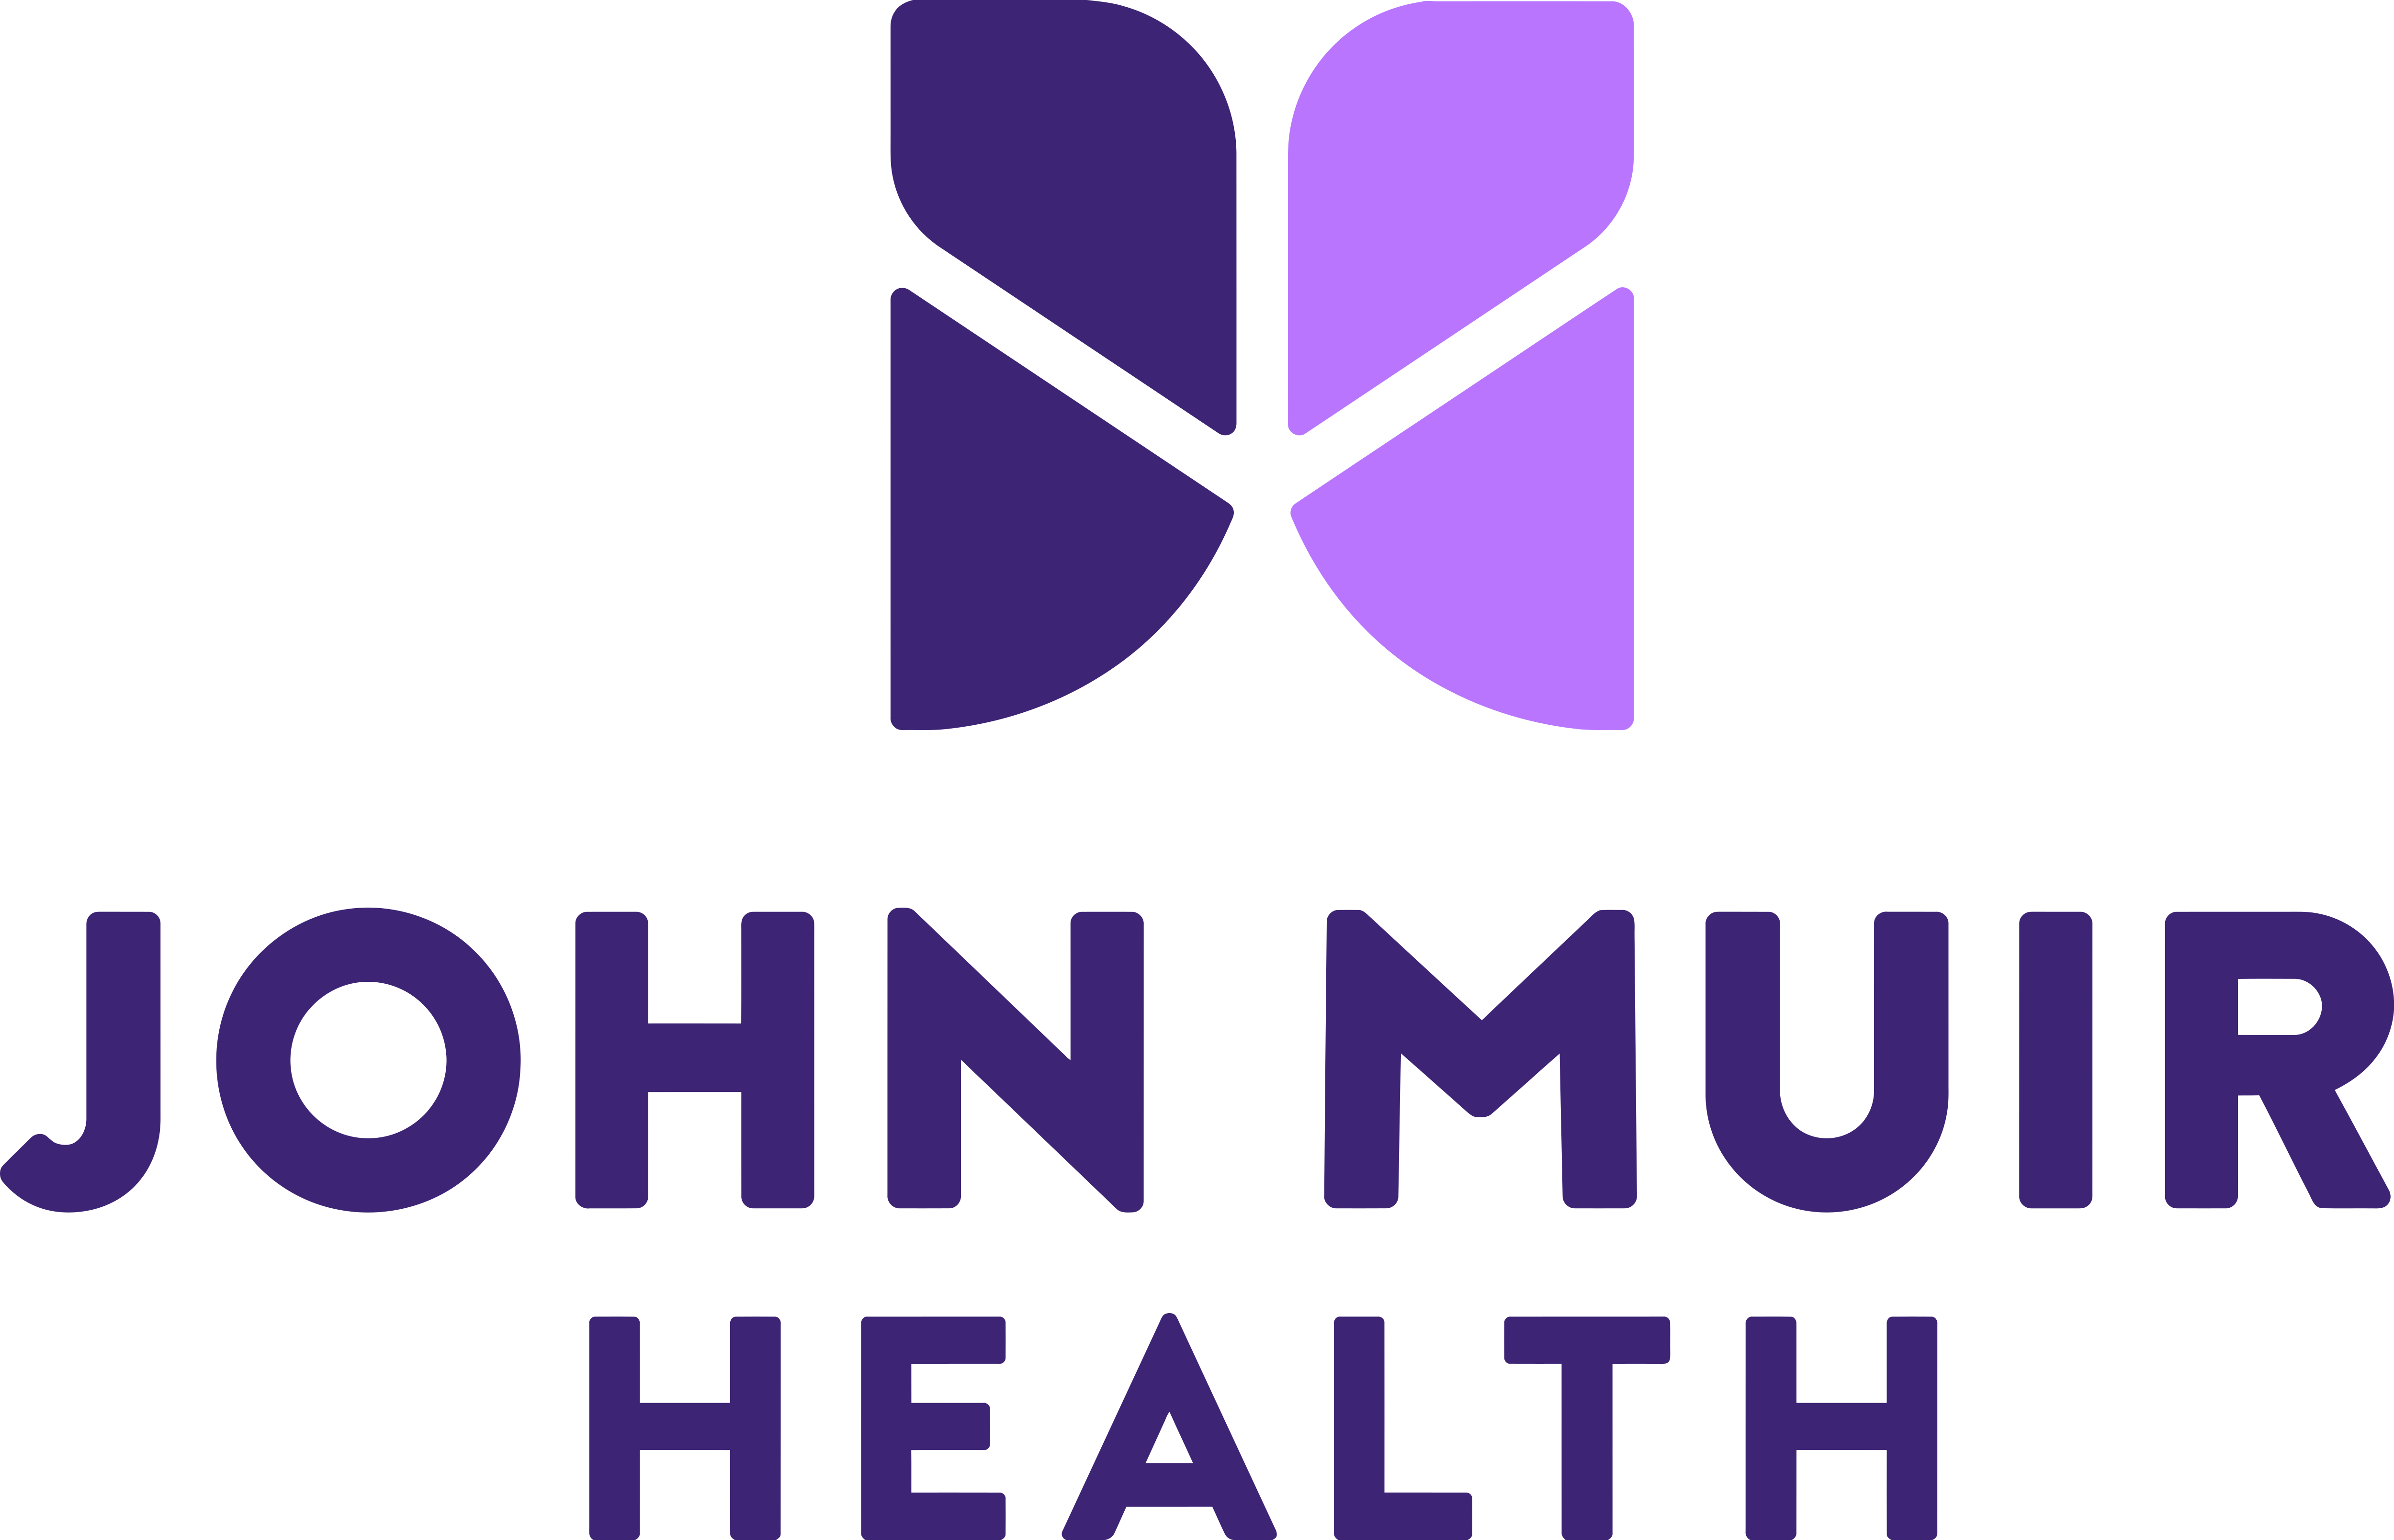 John Muir Health – Logos Download